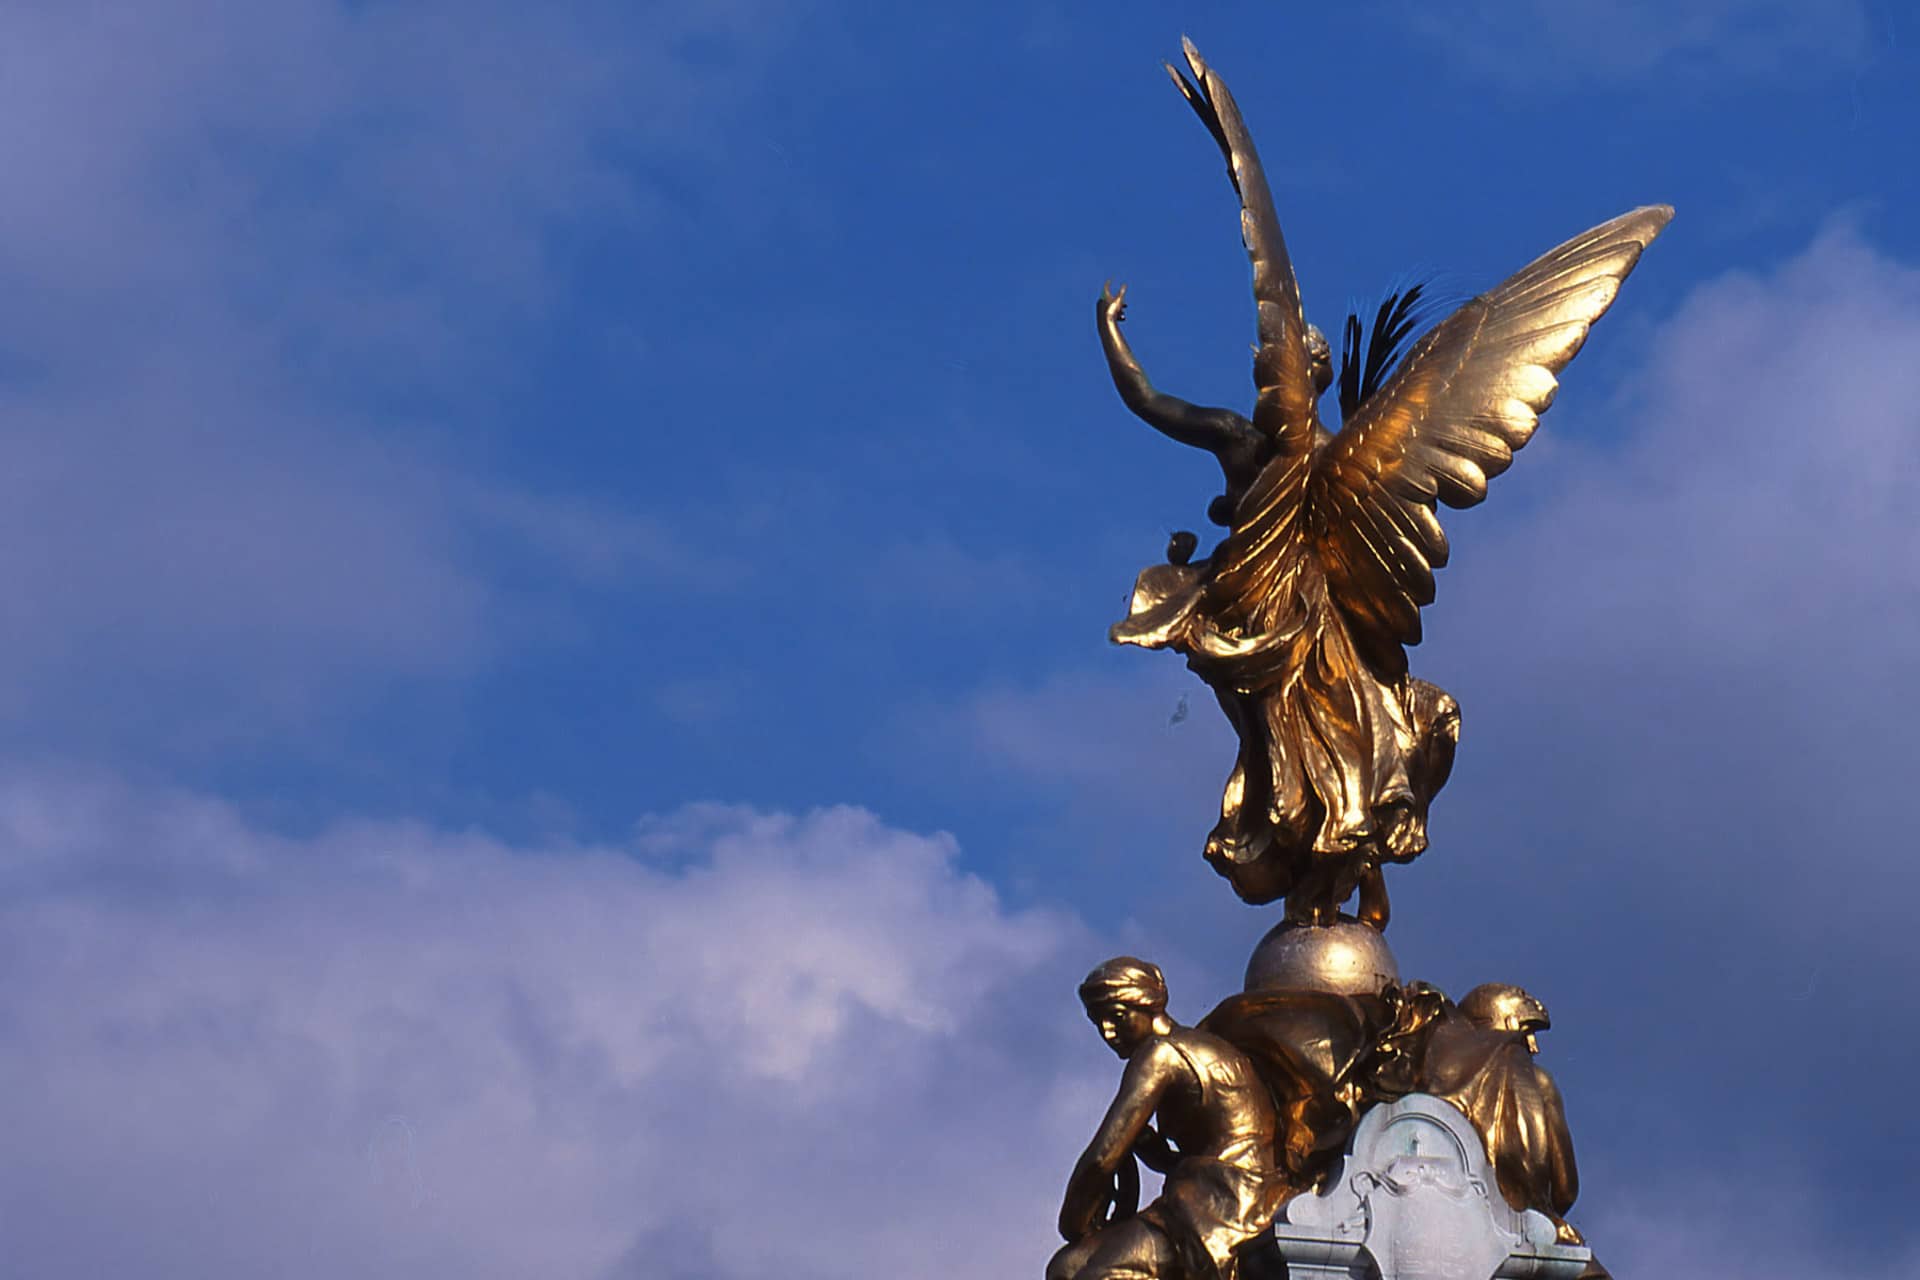 Victoria Memorial Statue in London, England.